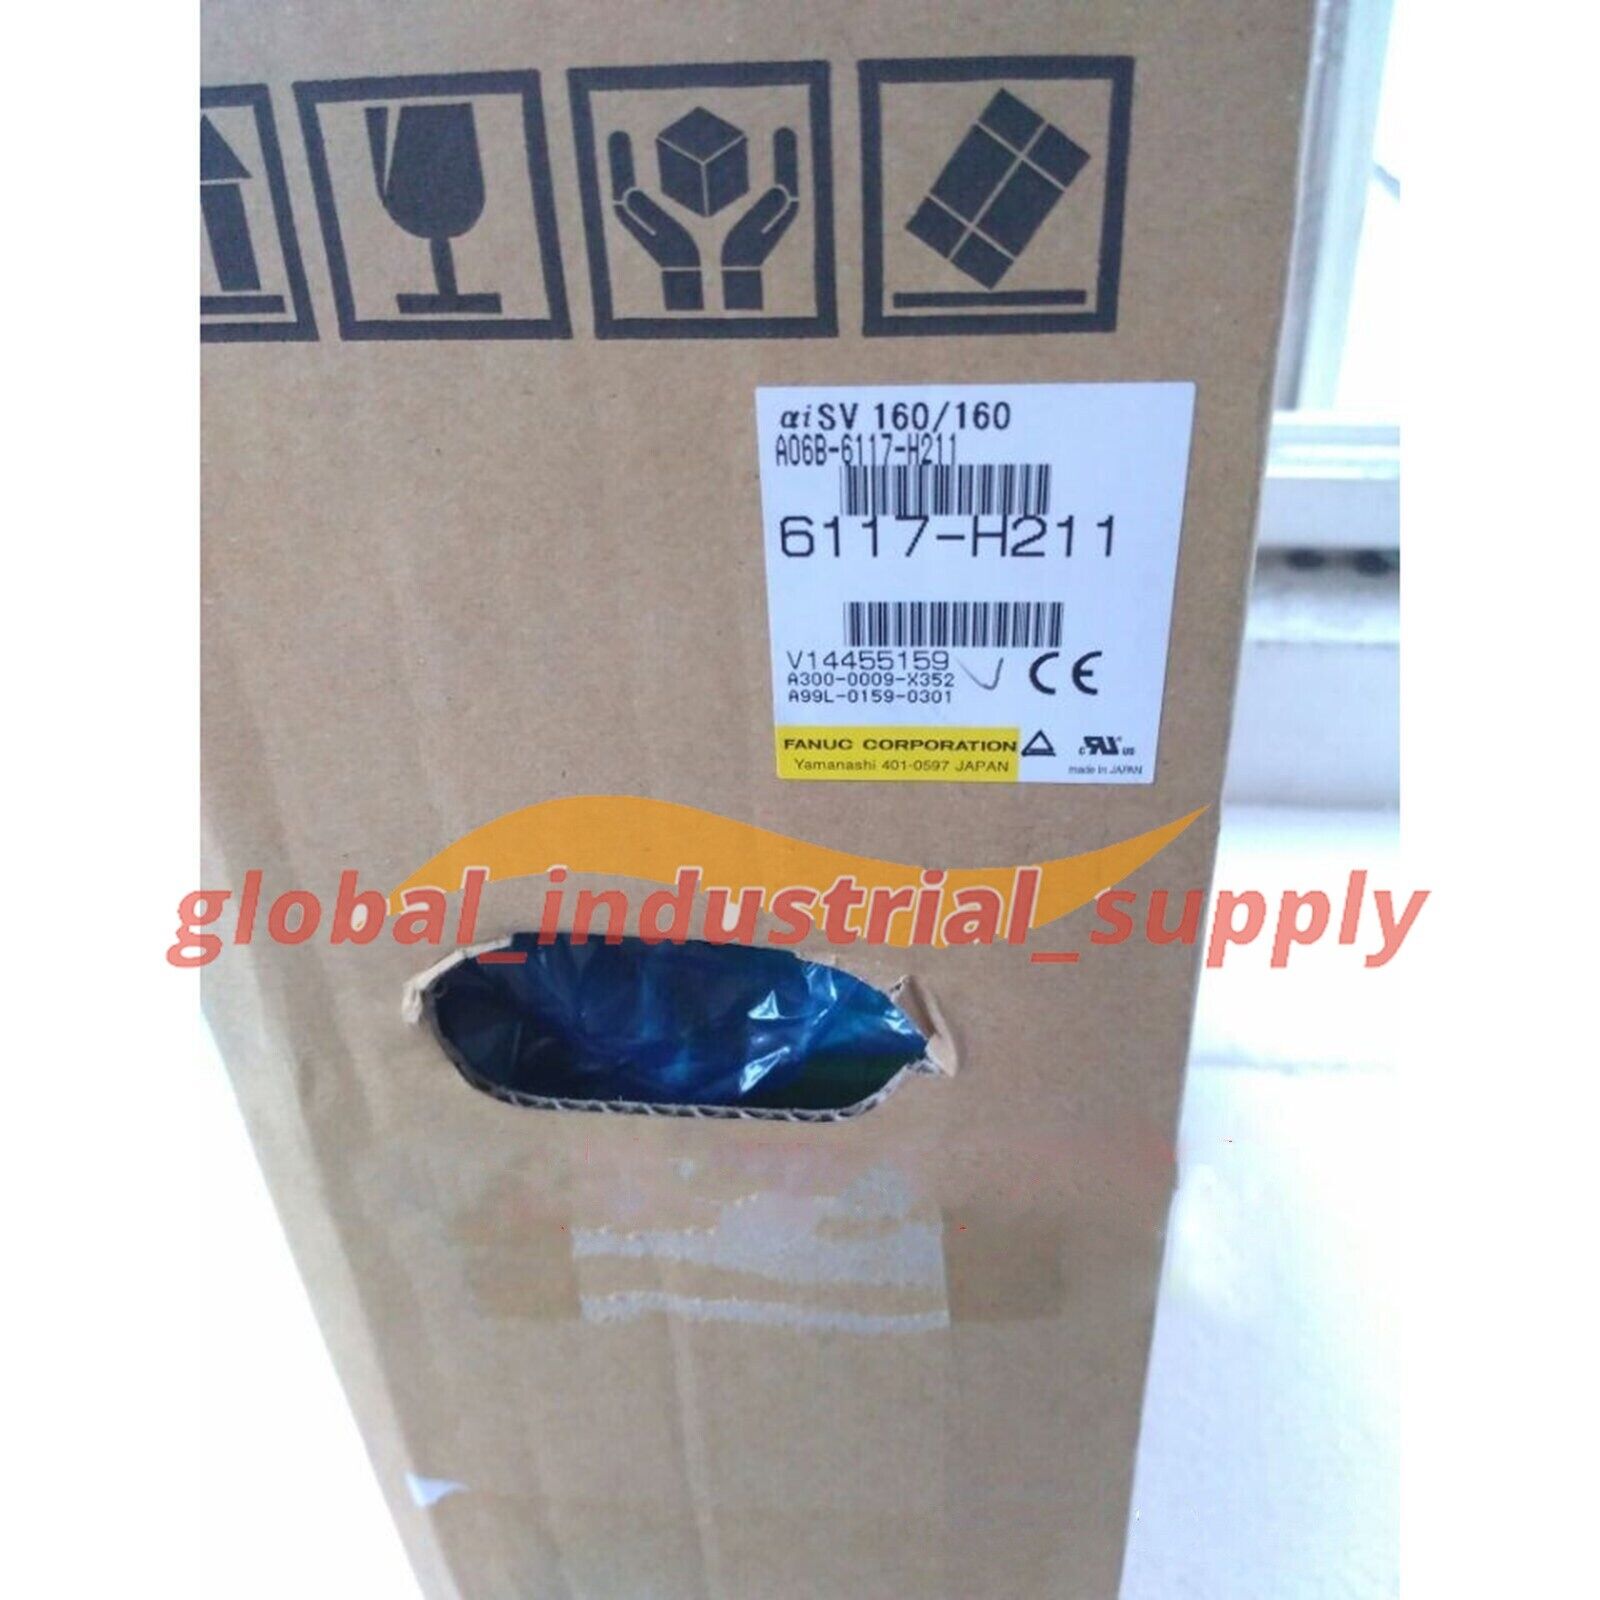 A06B-6117-H211 Fanuc server Driver Brand New Shipping DHL or FedEX